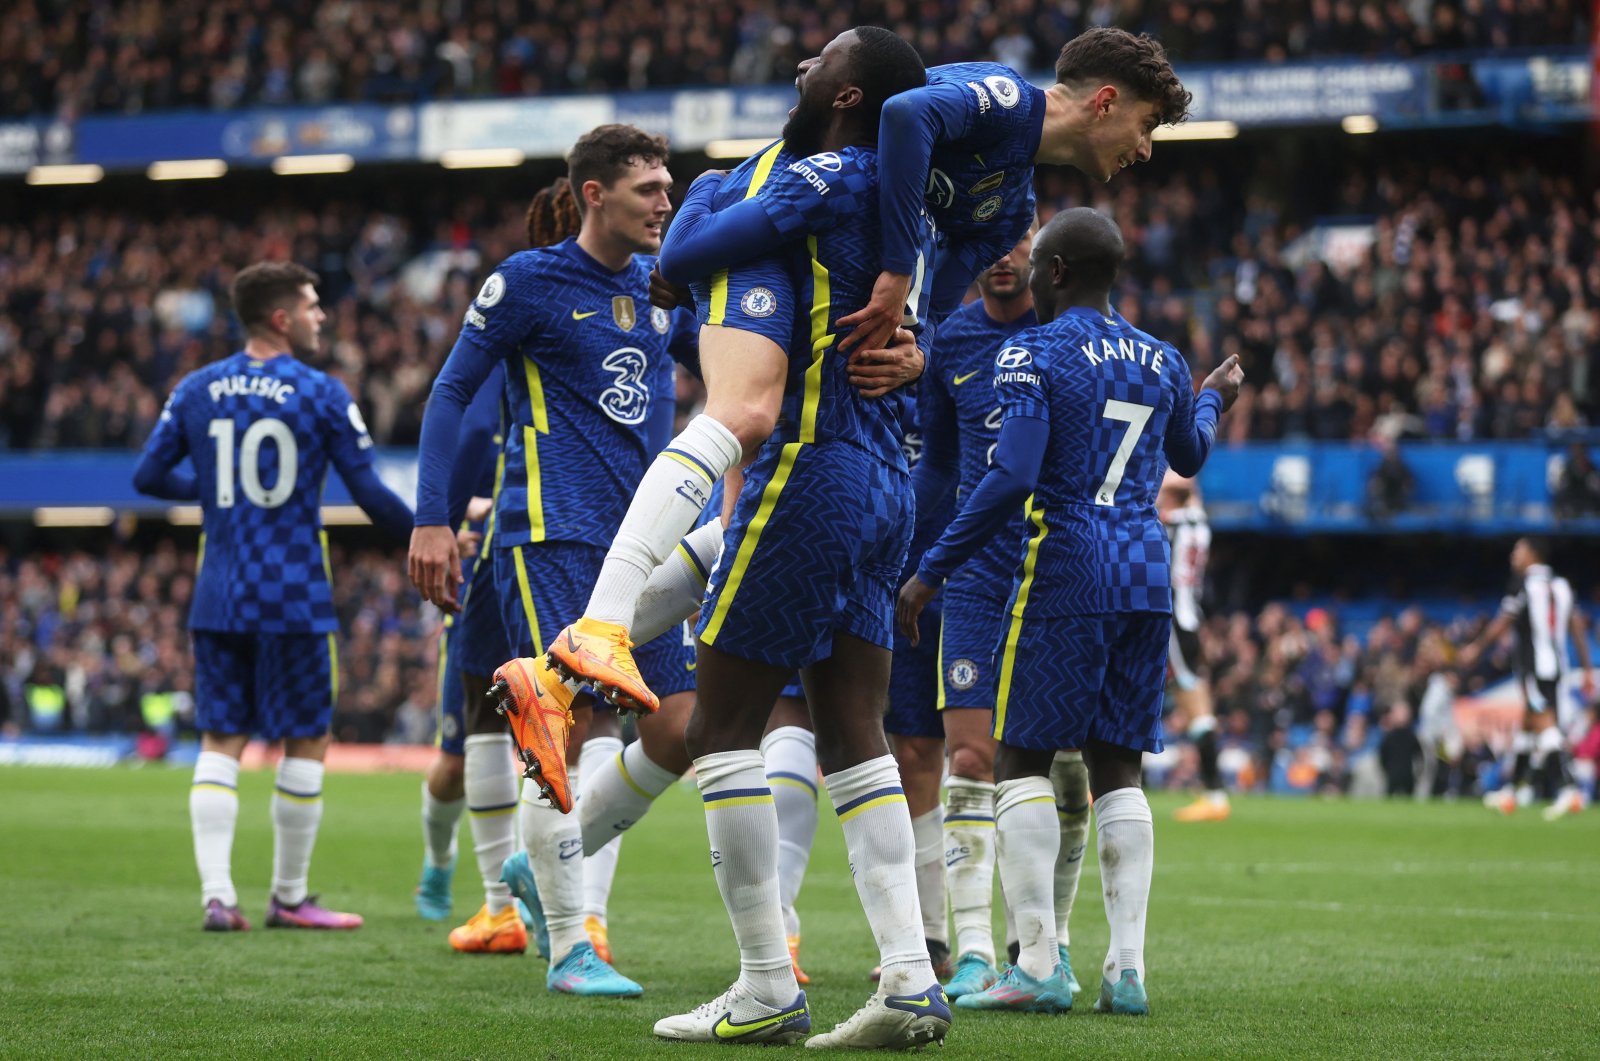 Chelsea players celebrate a goal in a Premier League match against Newcastle, London, England, March 13, 2022. (Reuters Photo)